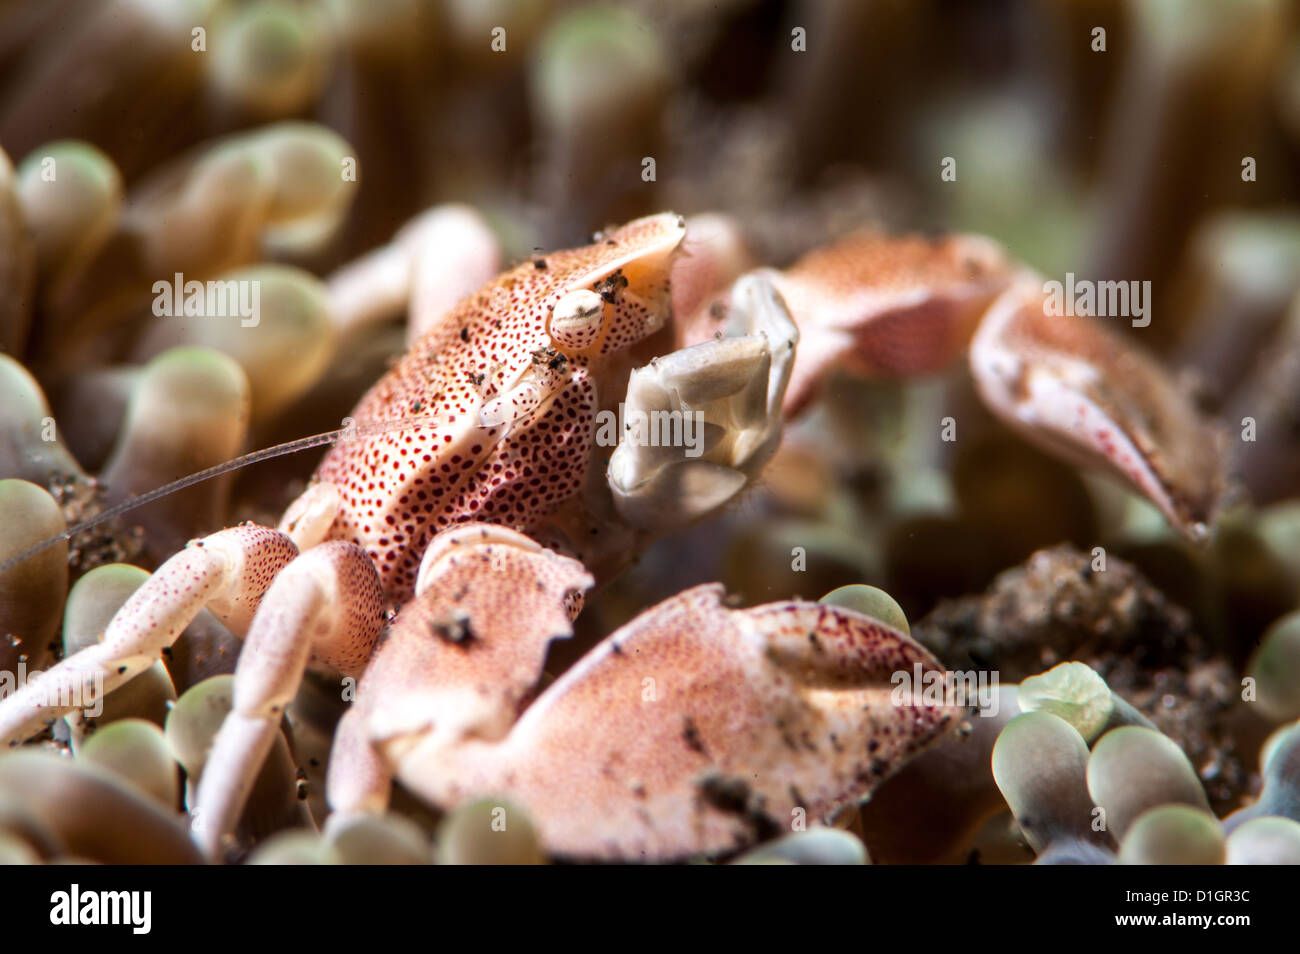 Porcelain crab (Neopetrolisthes maculata), Sulawesi, Indonesia, Southeast Asia, Asia Stock Photo